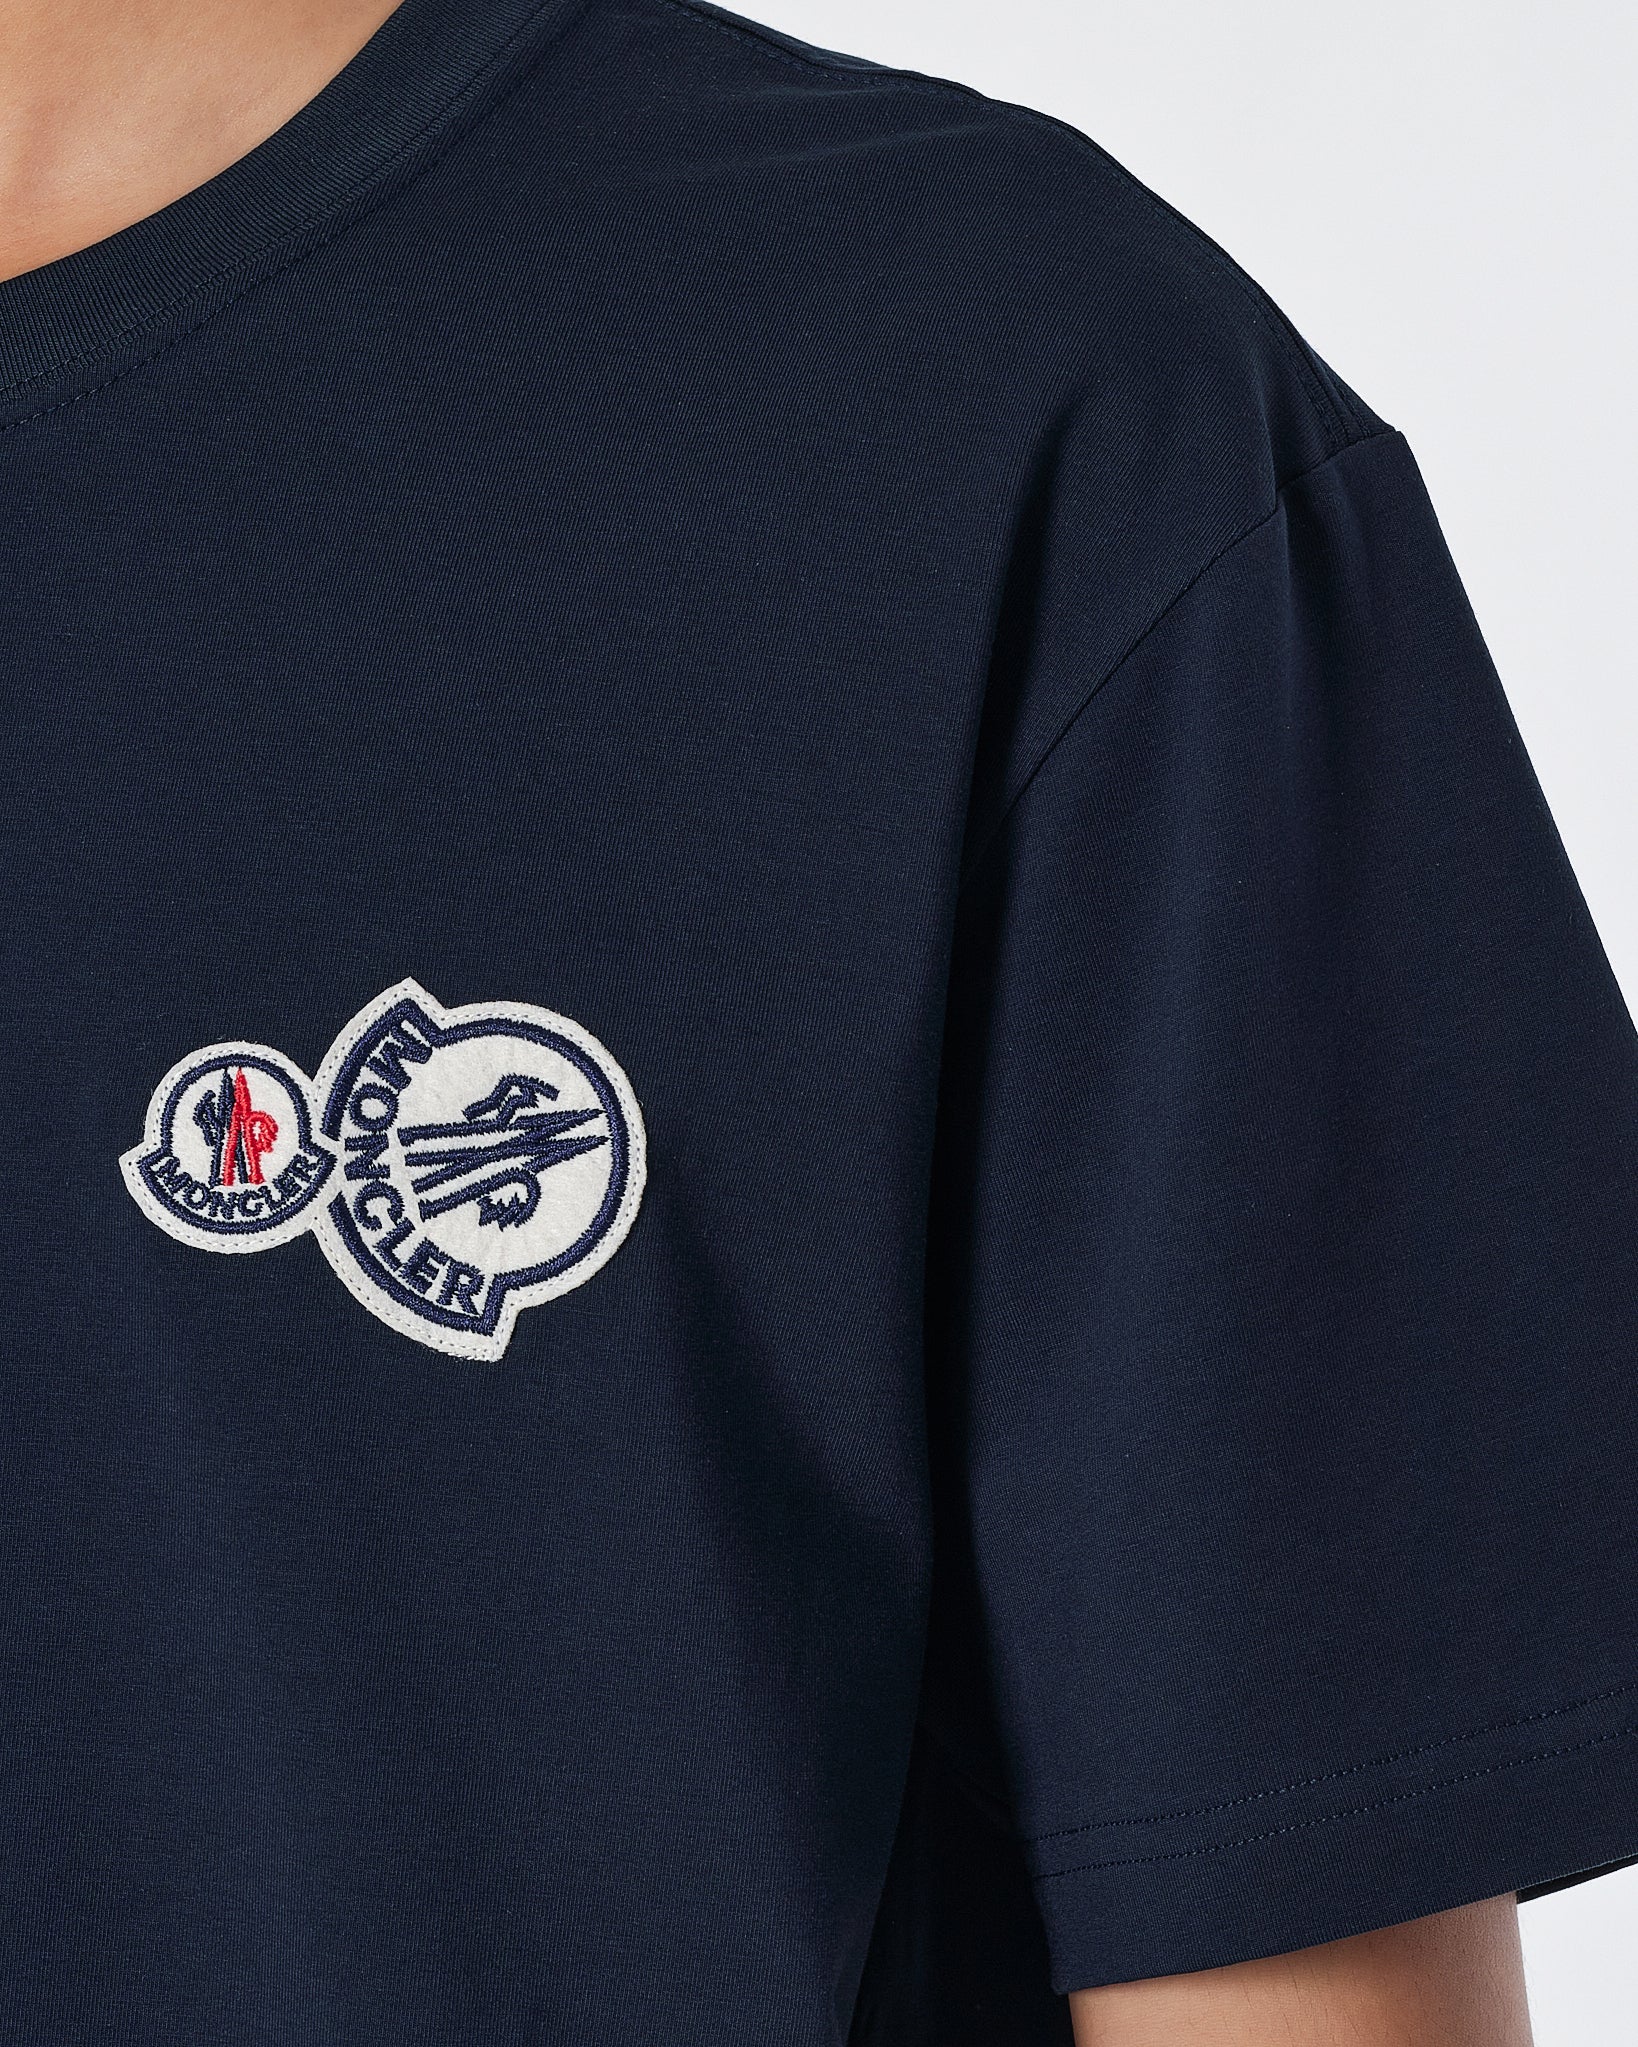 MON Logo Embroidered Men Blue T-Shirt 15.90